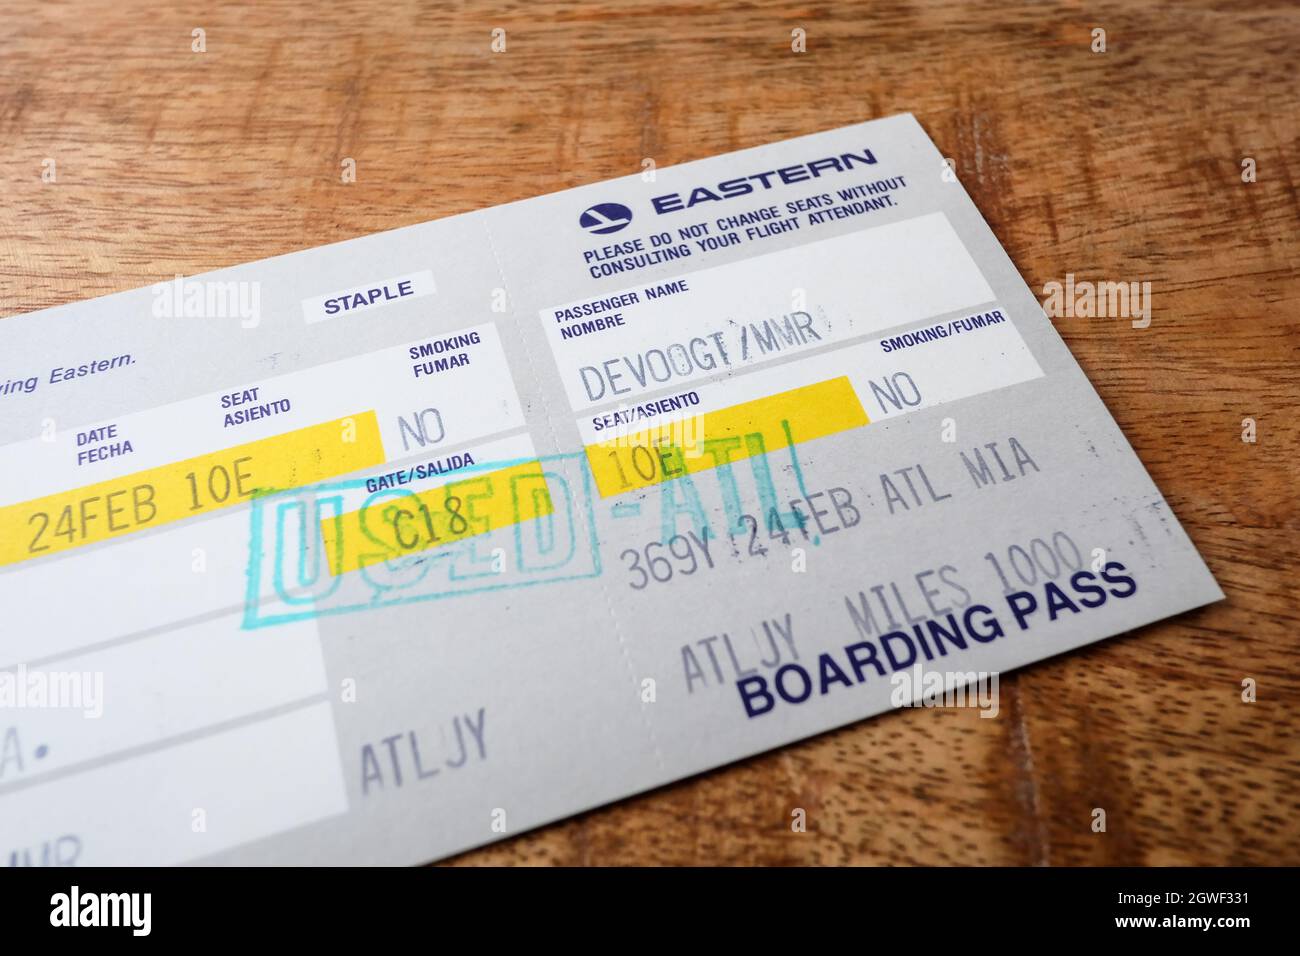 eastern boarding pass 1986 miami Stock Photo - Alamy